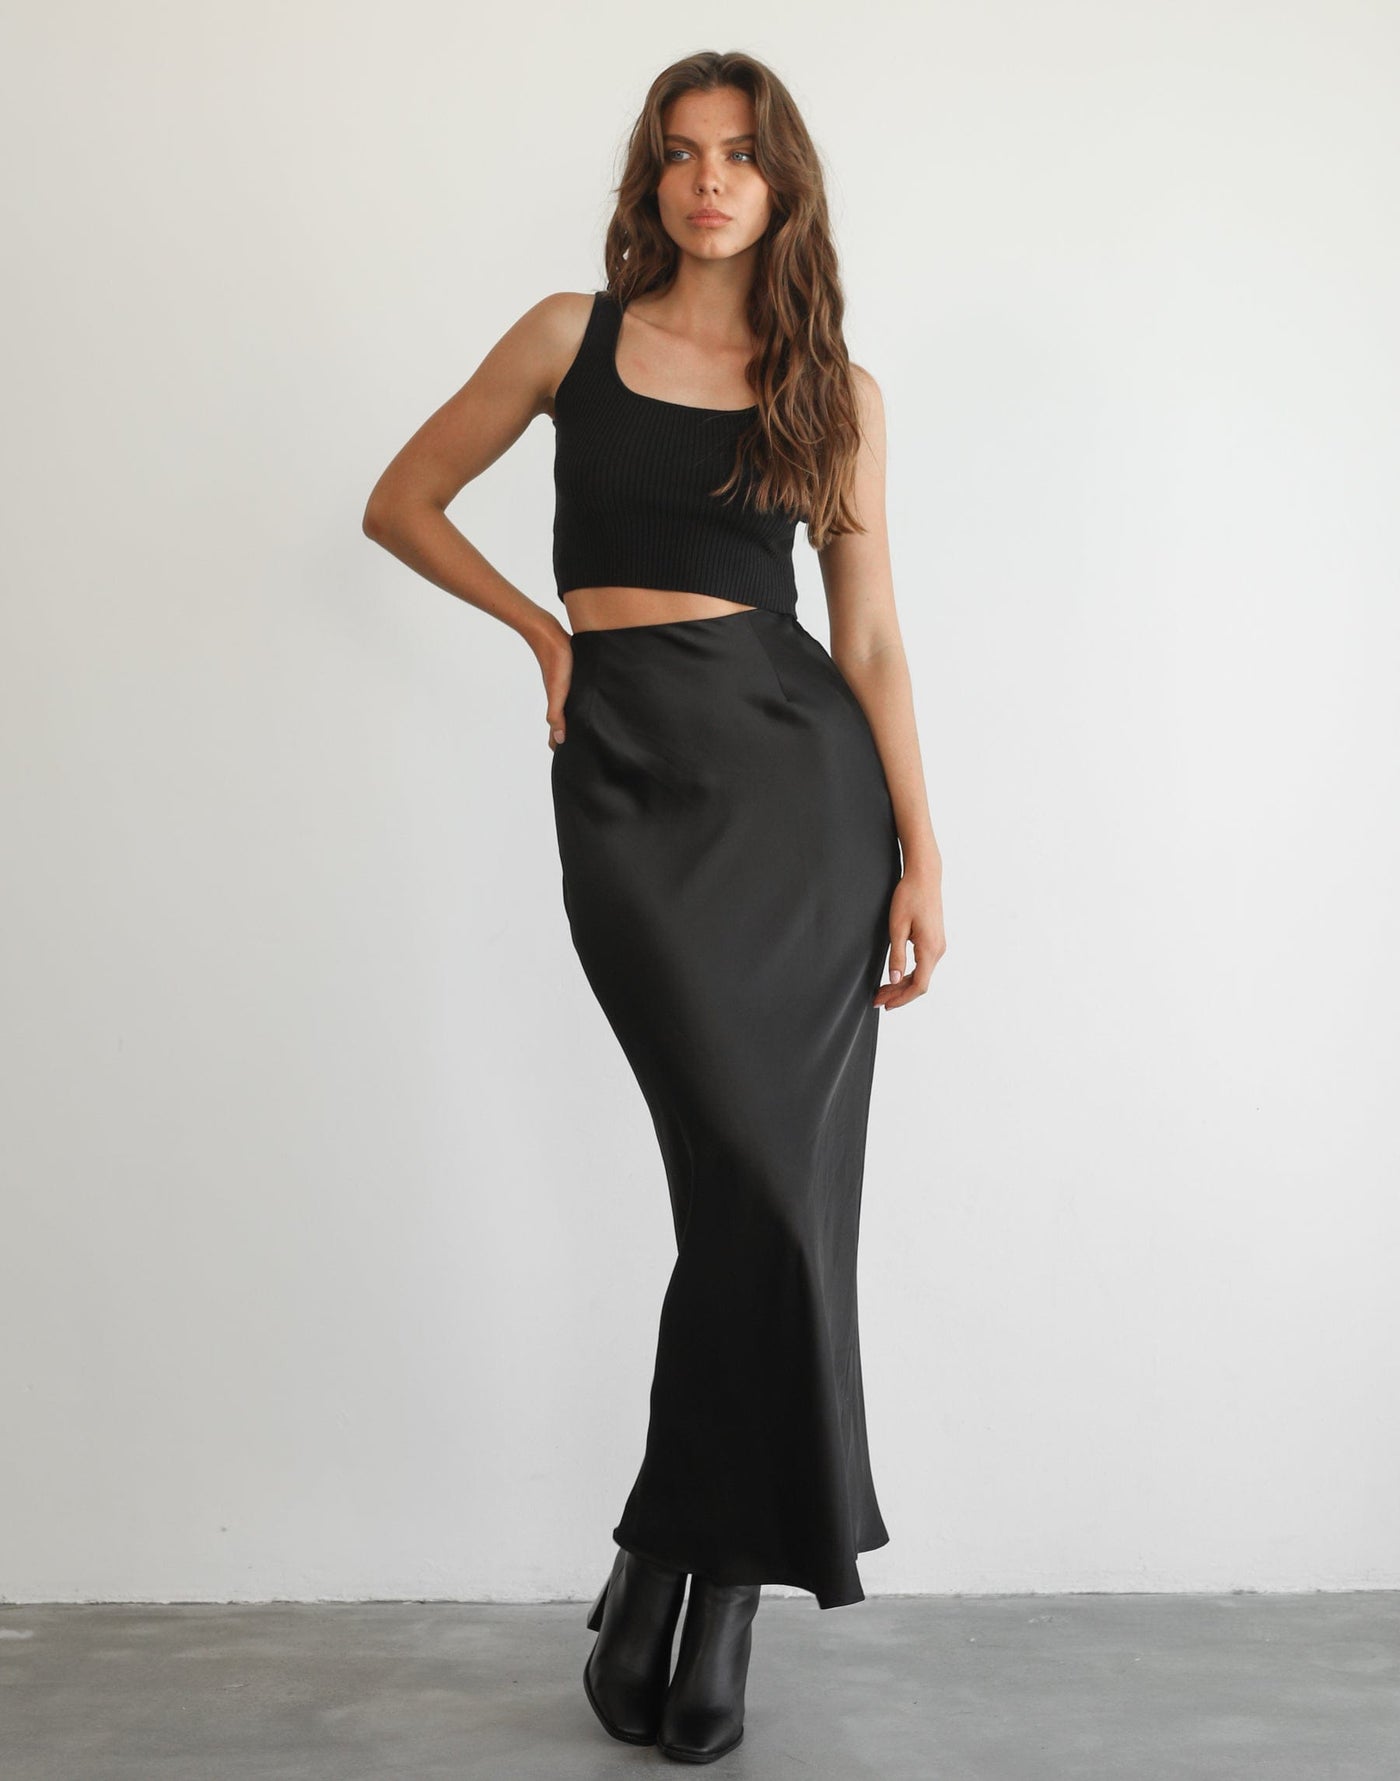 Delaney Top (Black) - Black Top - Women's Top - Charcoal Clothing